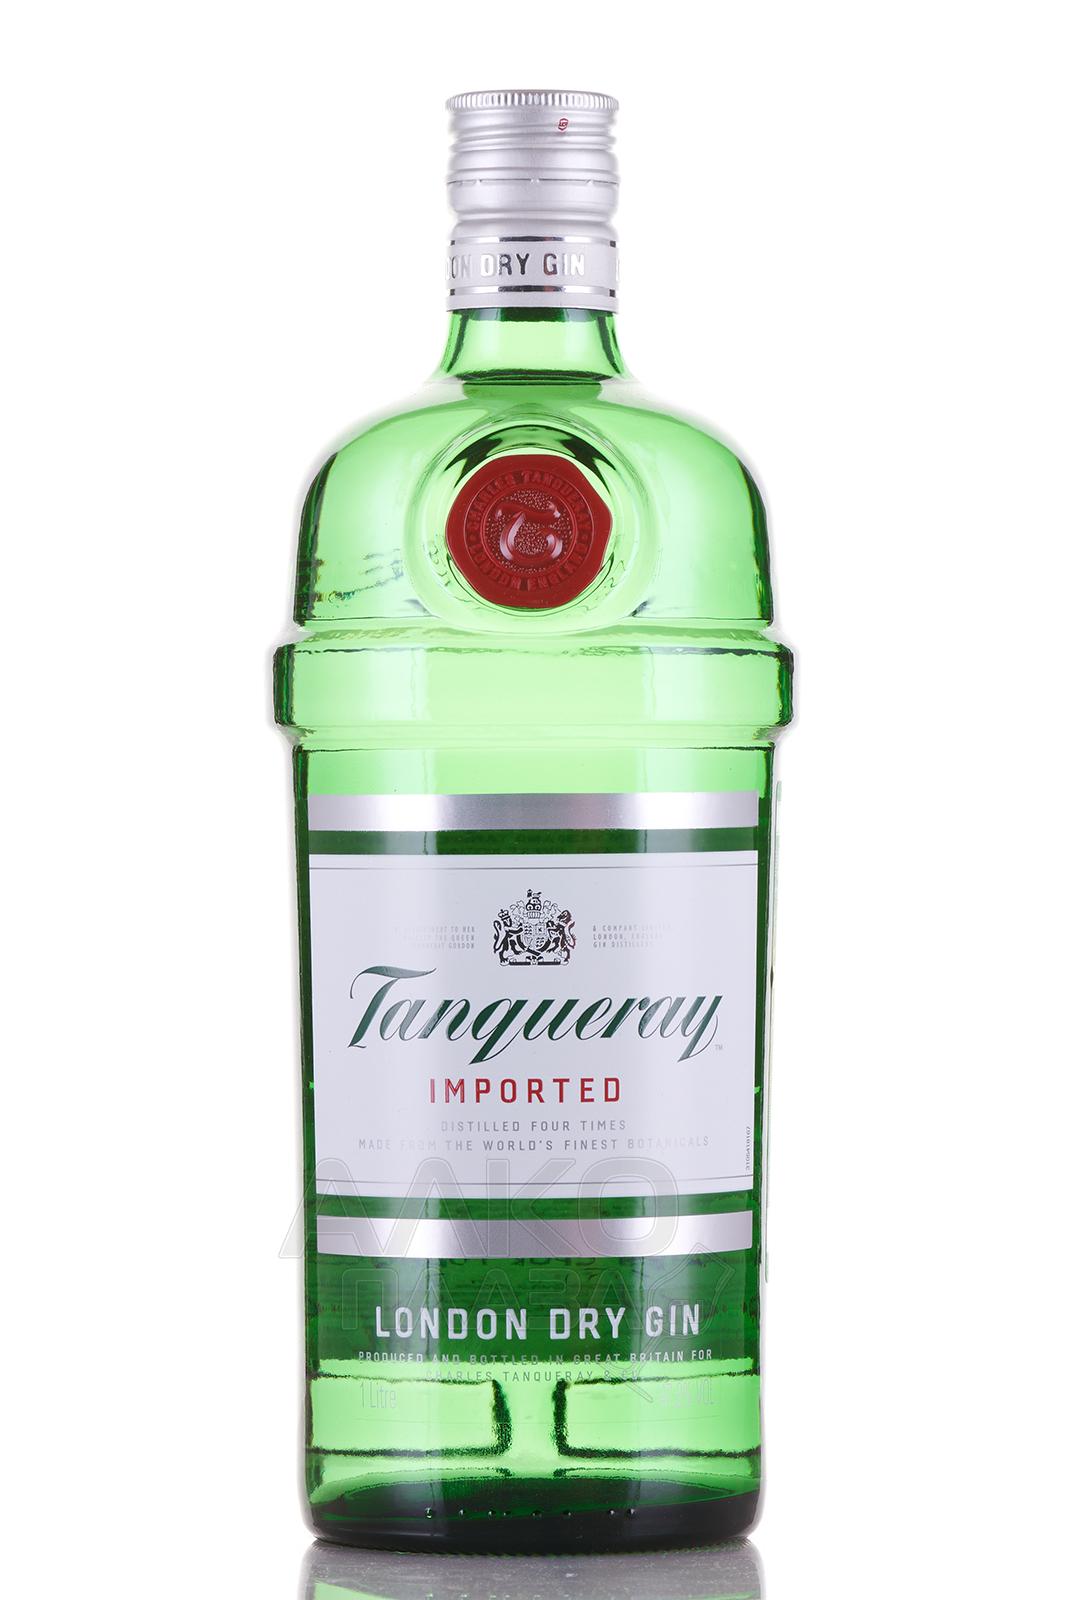 Gin Tanqueray London Dry - джин Танкерей Лондон Драй 1 л